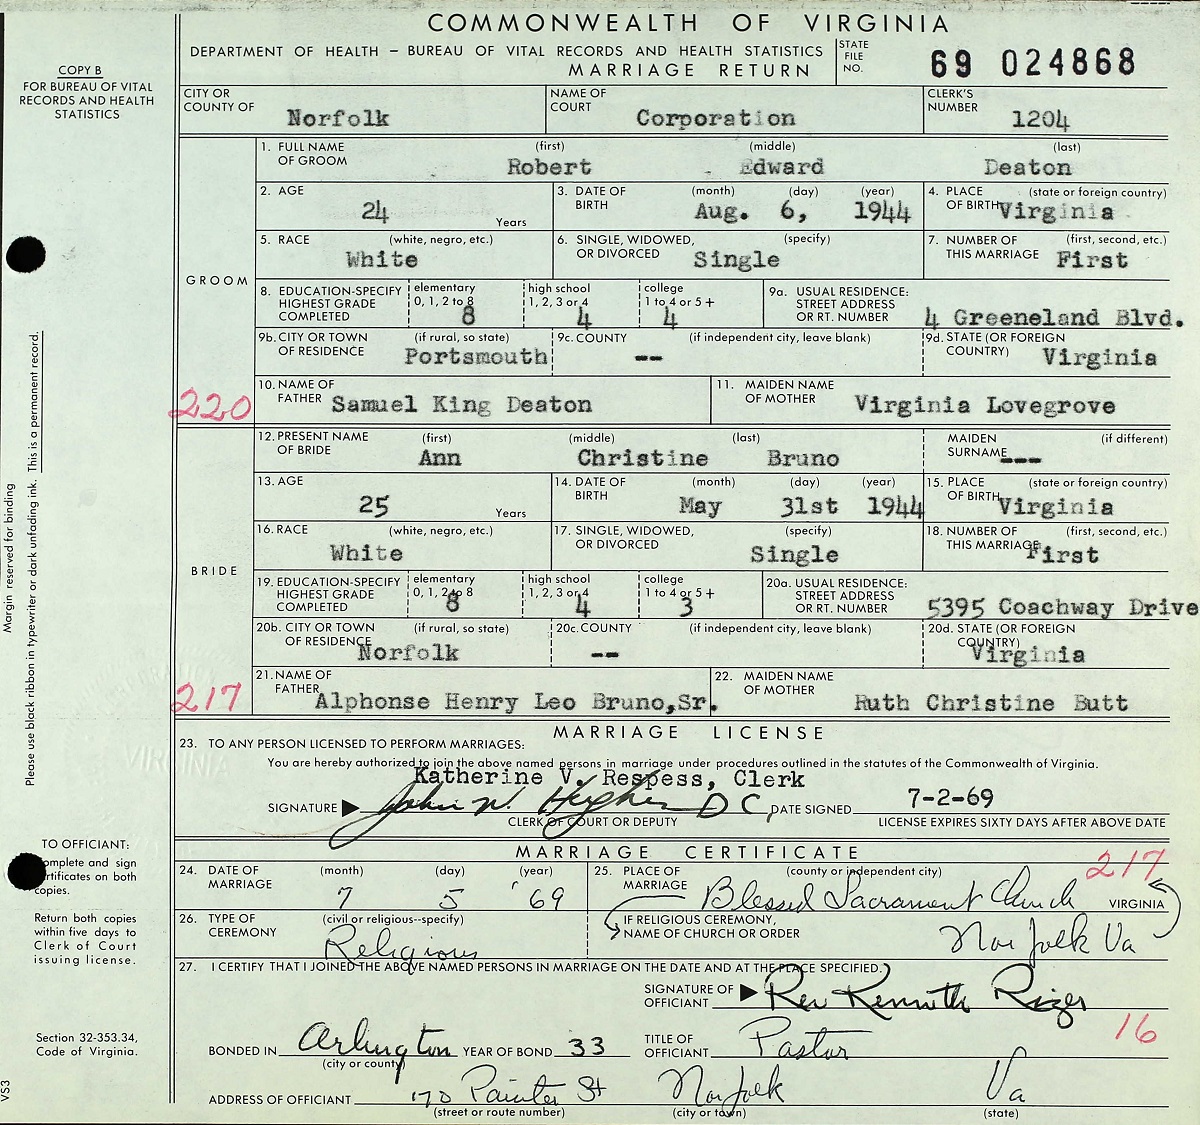 Ann Christine Bruno and Robert Edward Deaton Marriage Certificate